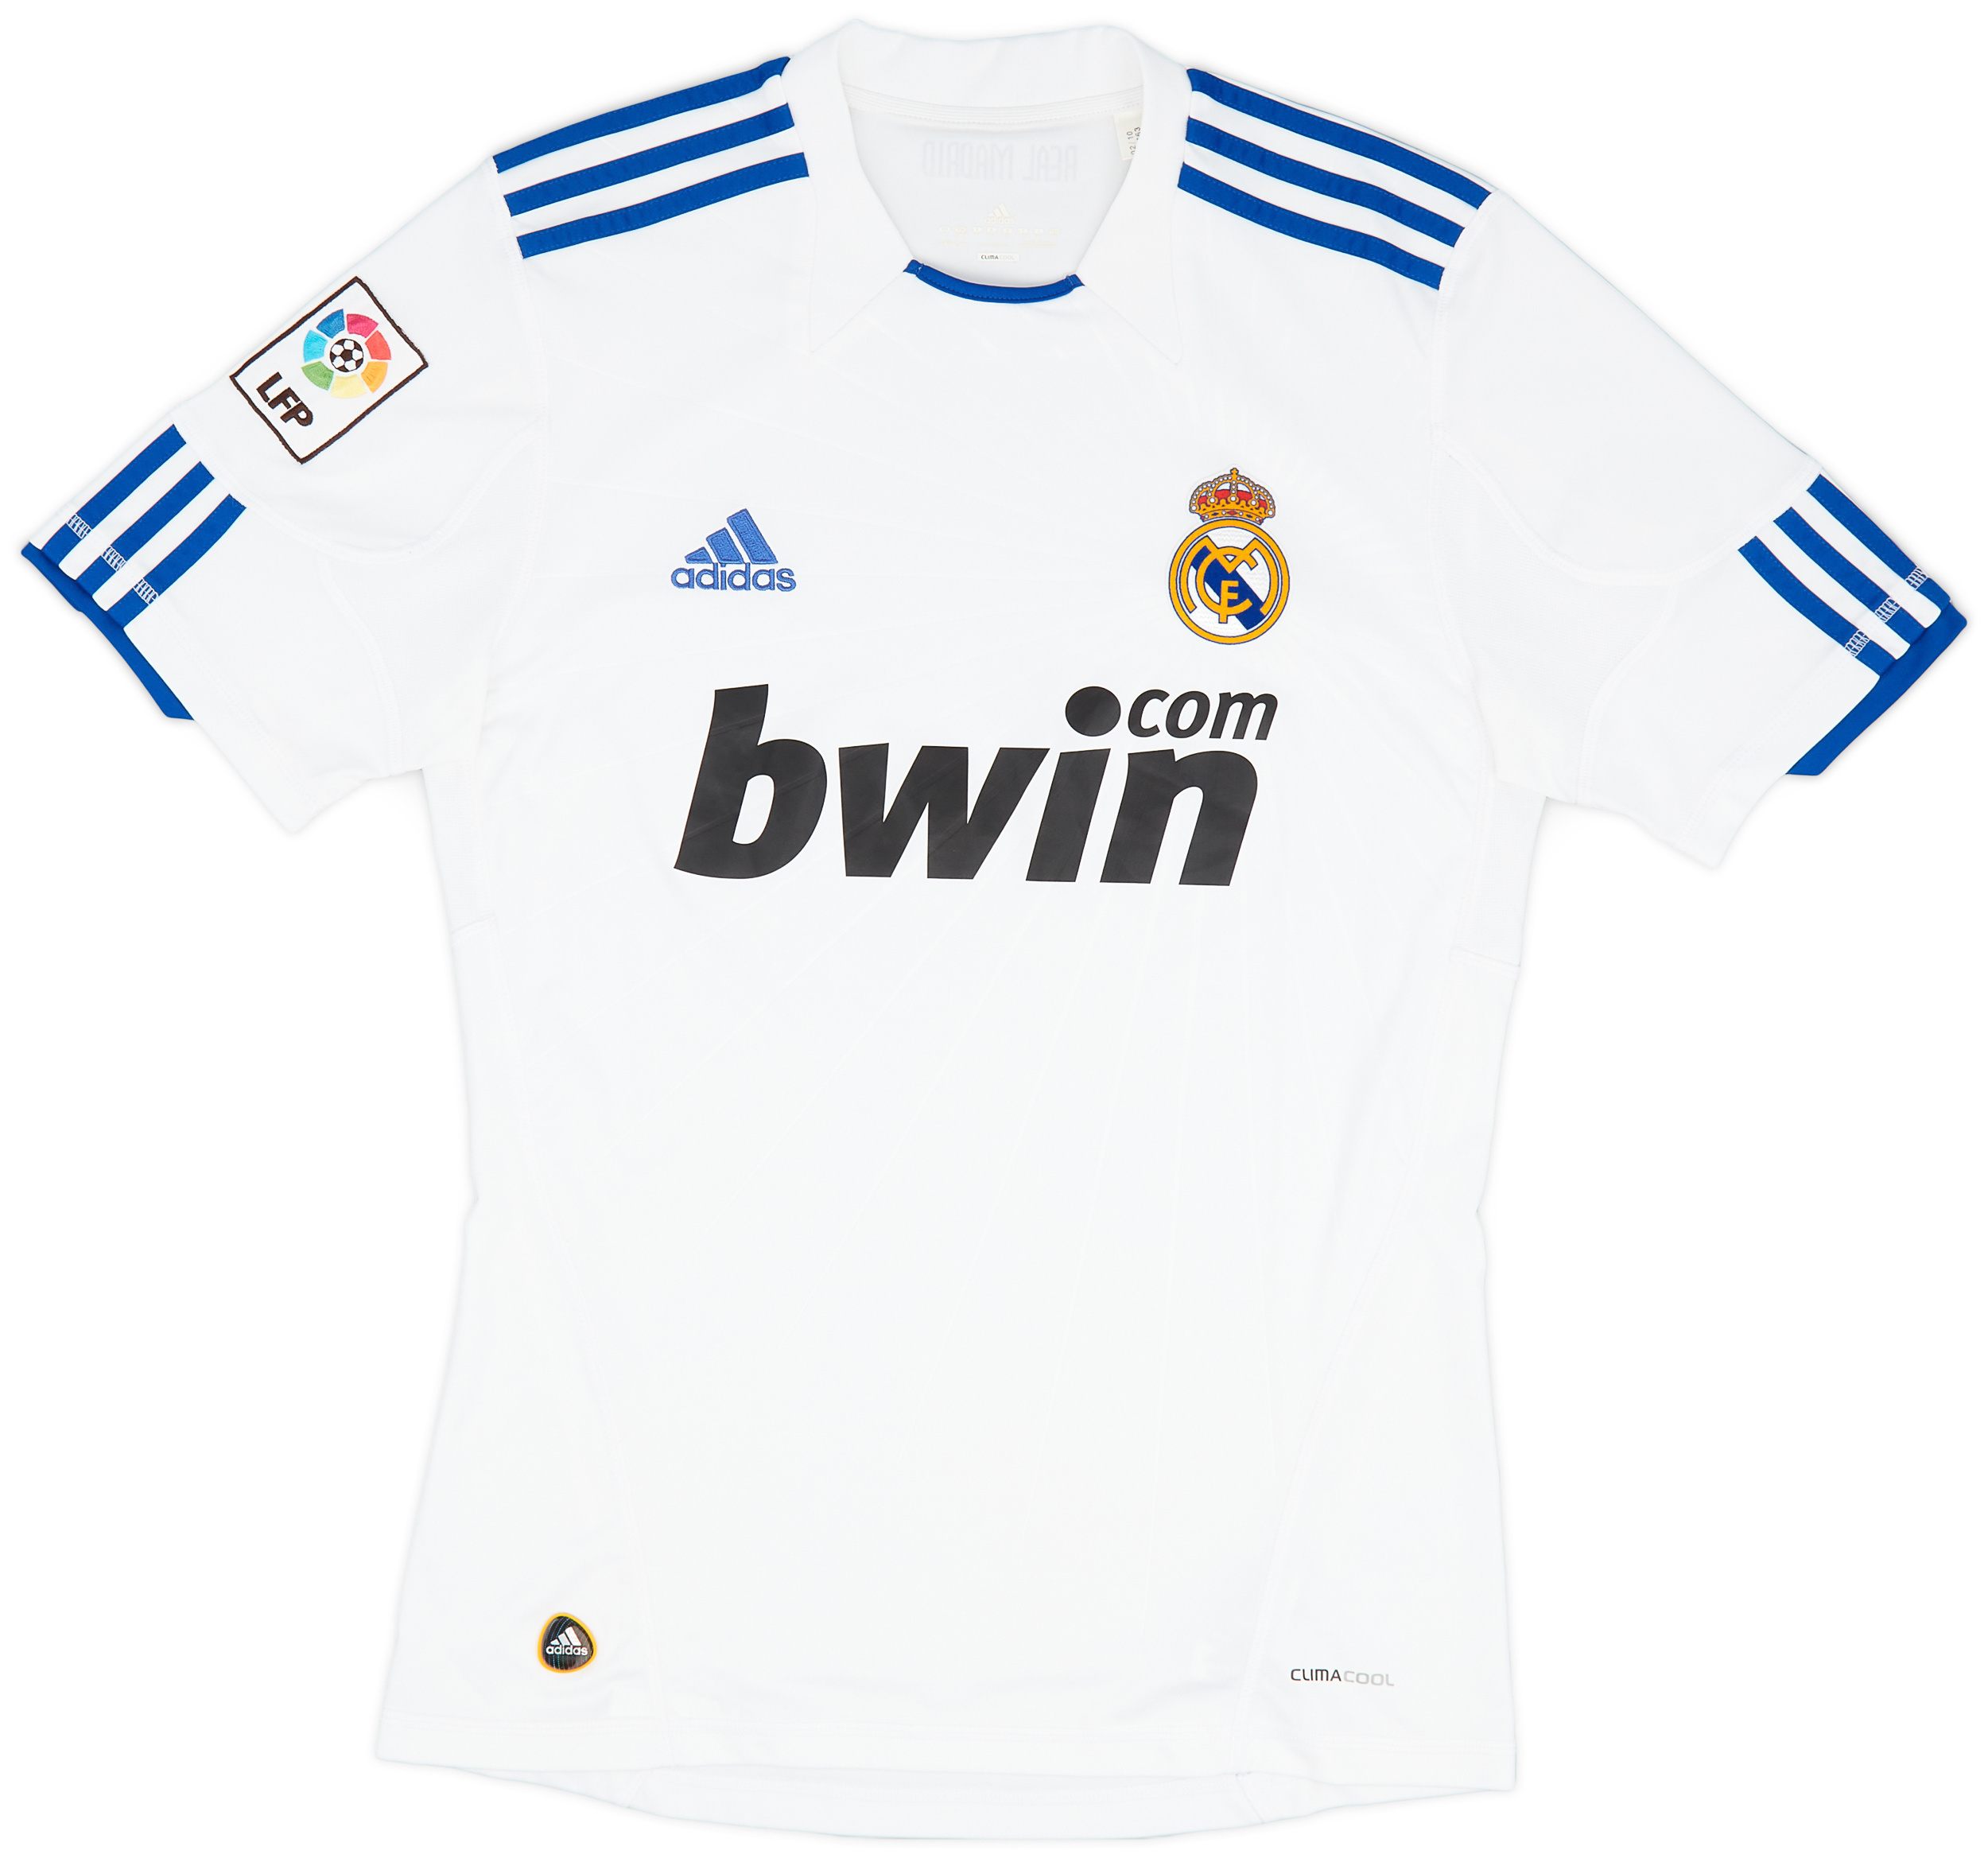 2010-11 Real Madrid Home Shirt - 9/10 - ()